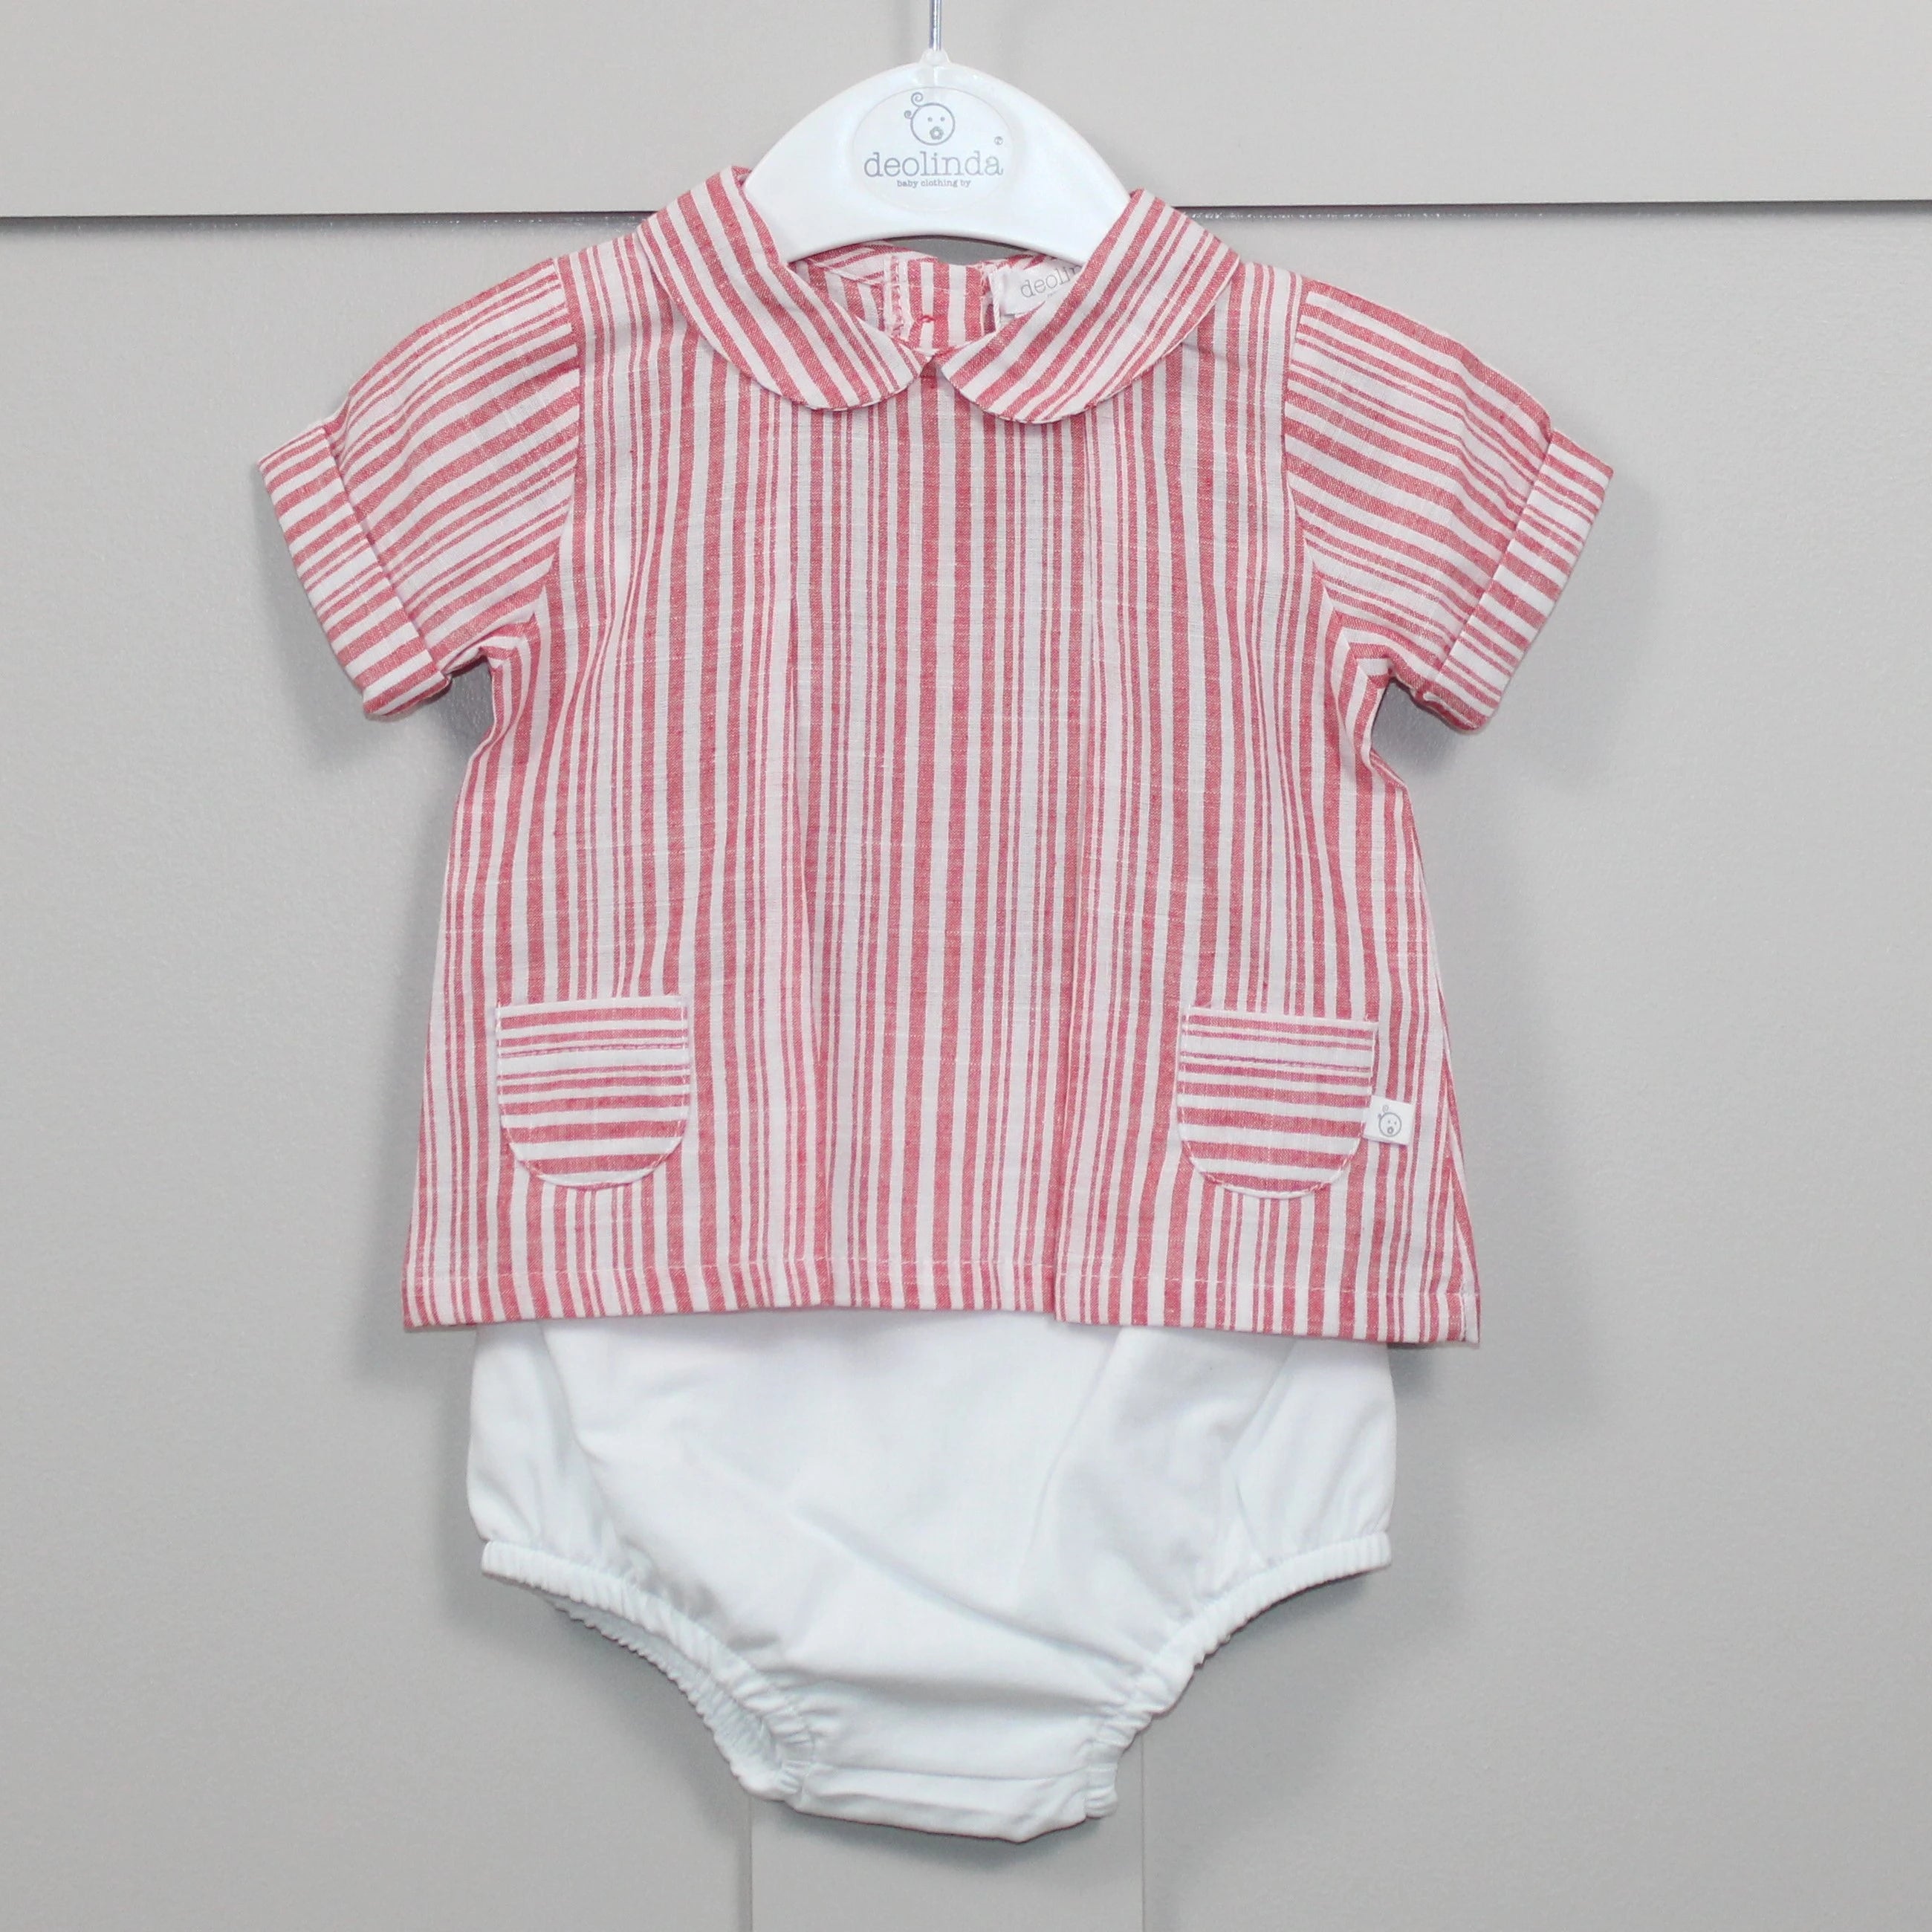 Deolinda Red Stripe shirt and shorts set 